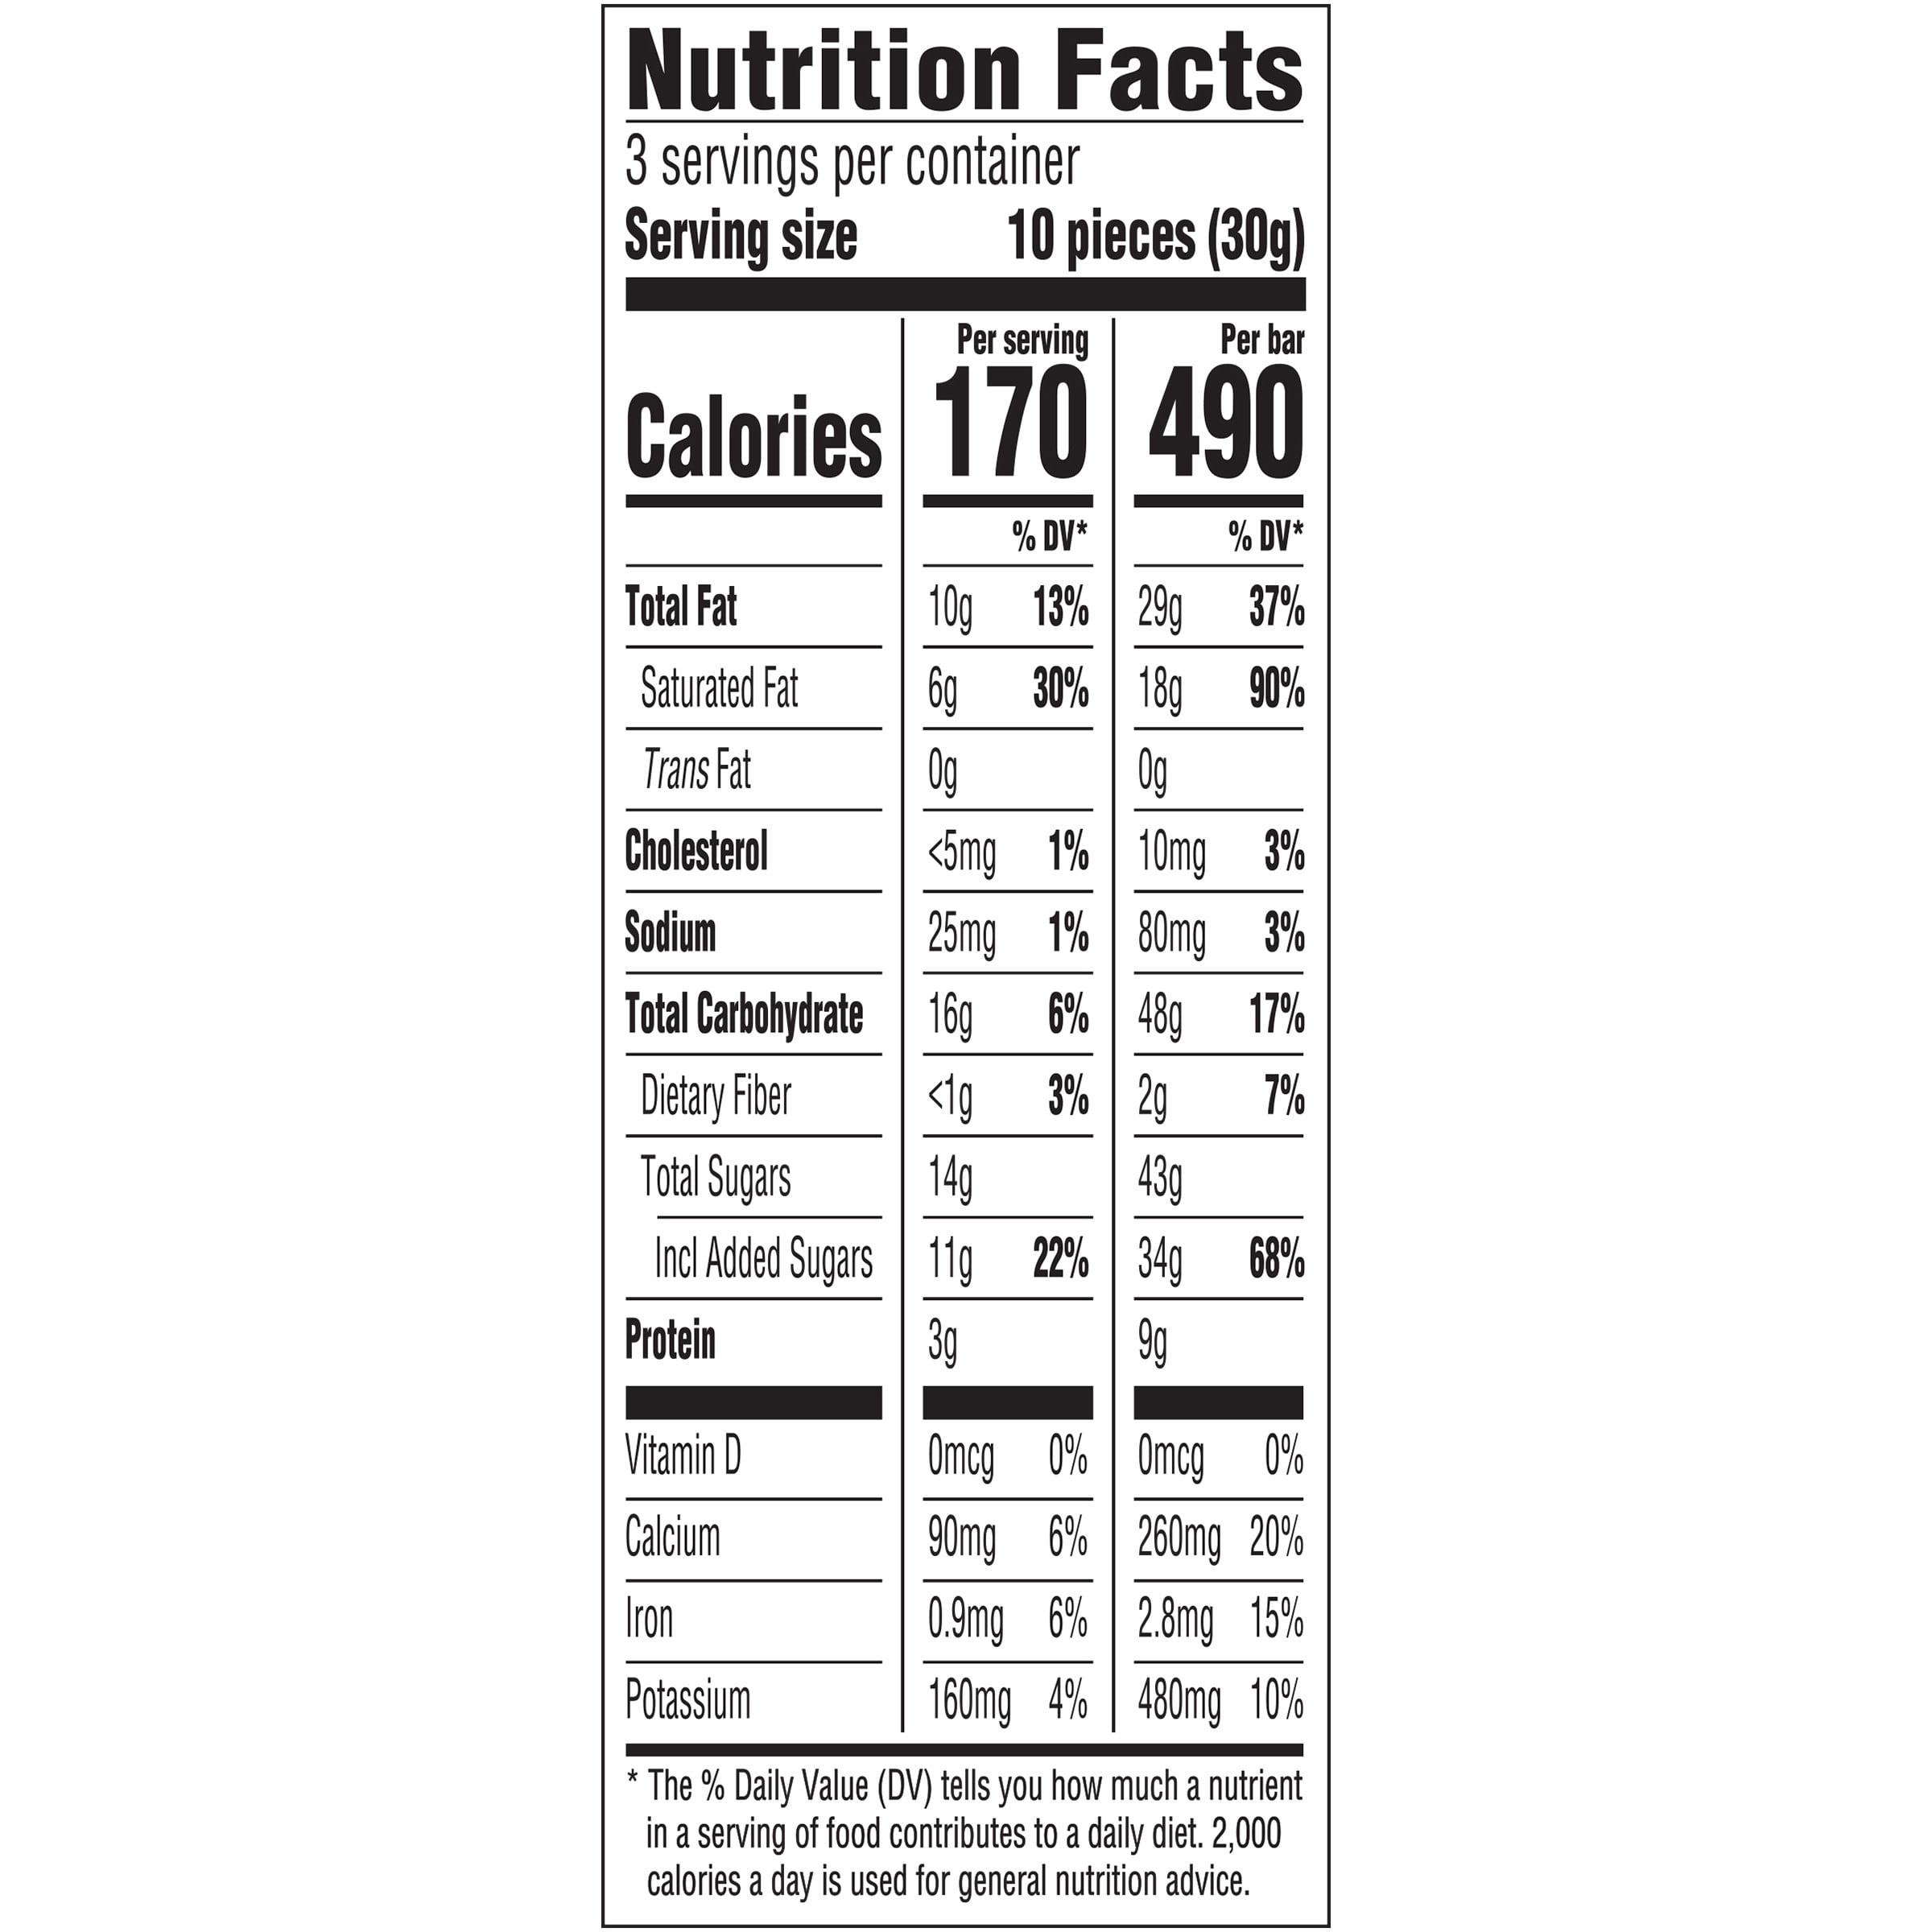 Green  Black's Organic Milk Chocolate Bar, 34% Cacao, 10 - 3.17 oz Packs -  Walmart.com